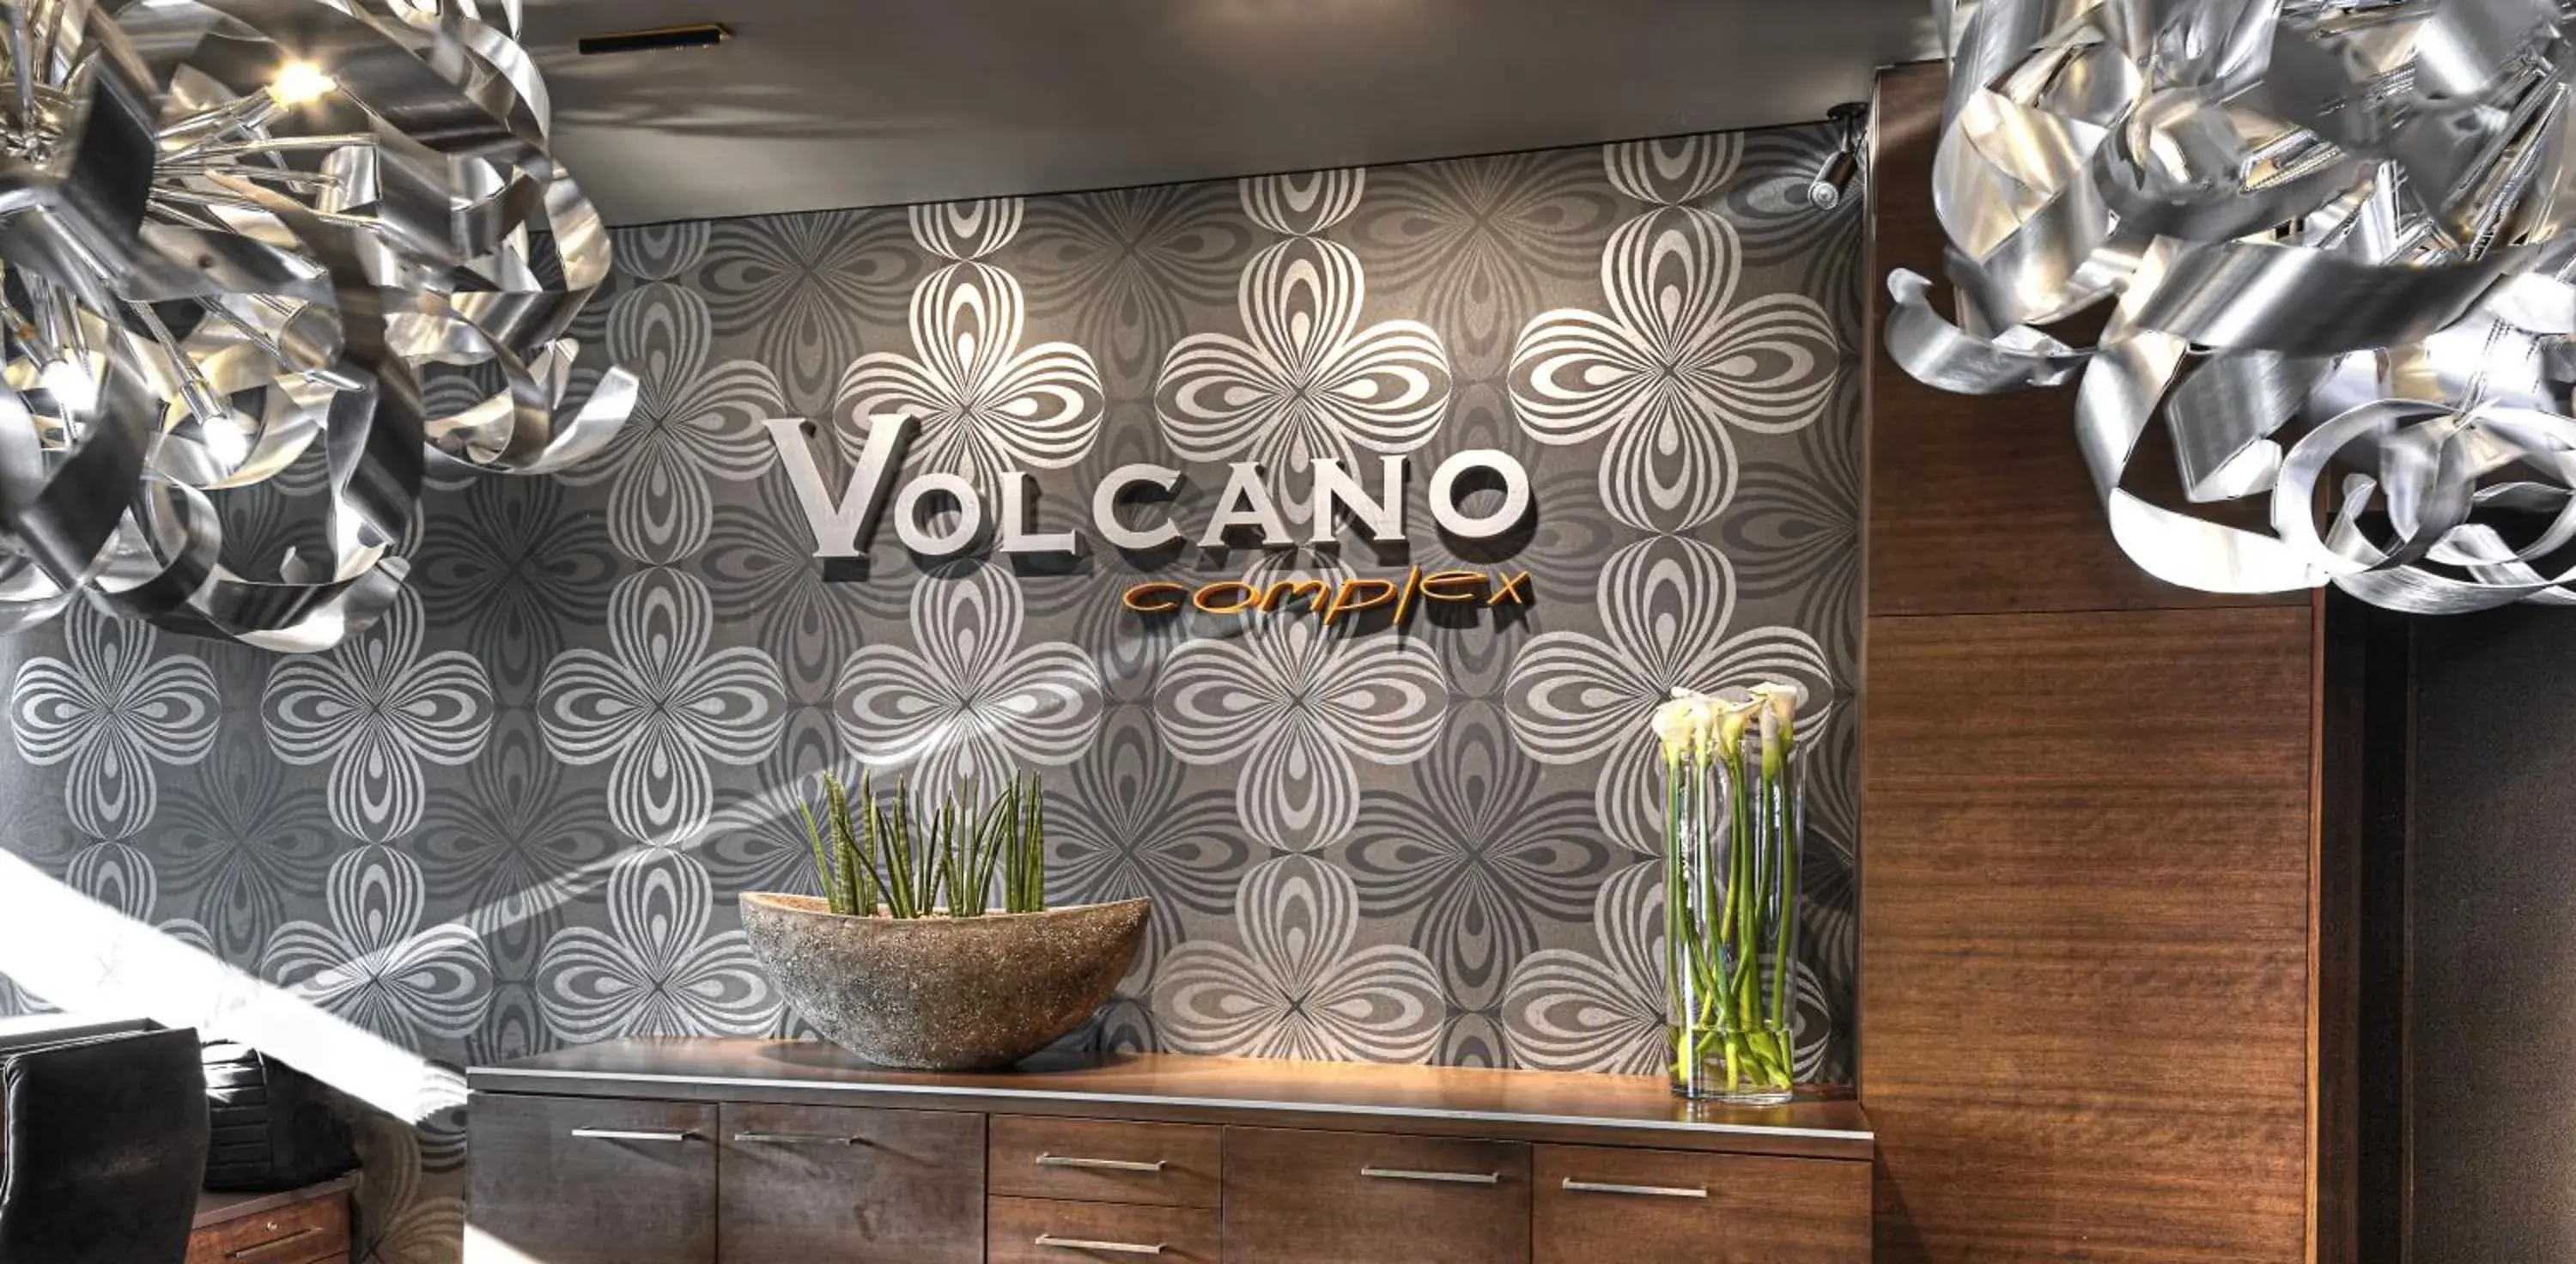 Lobby or reception in Volcano Spa Hotel